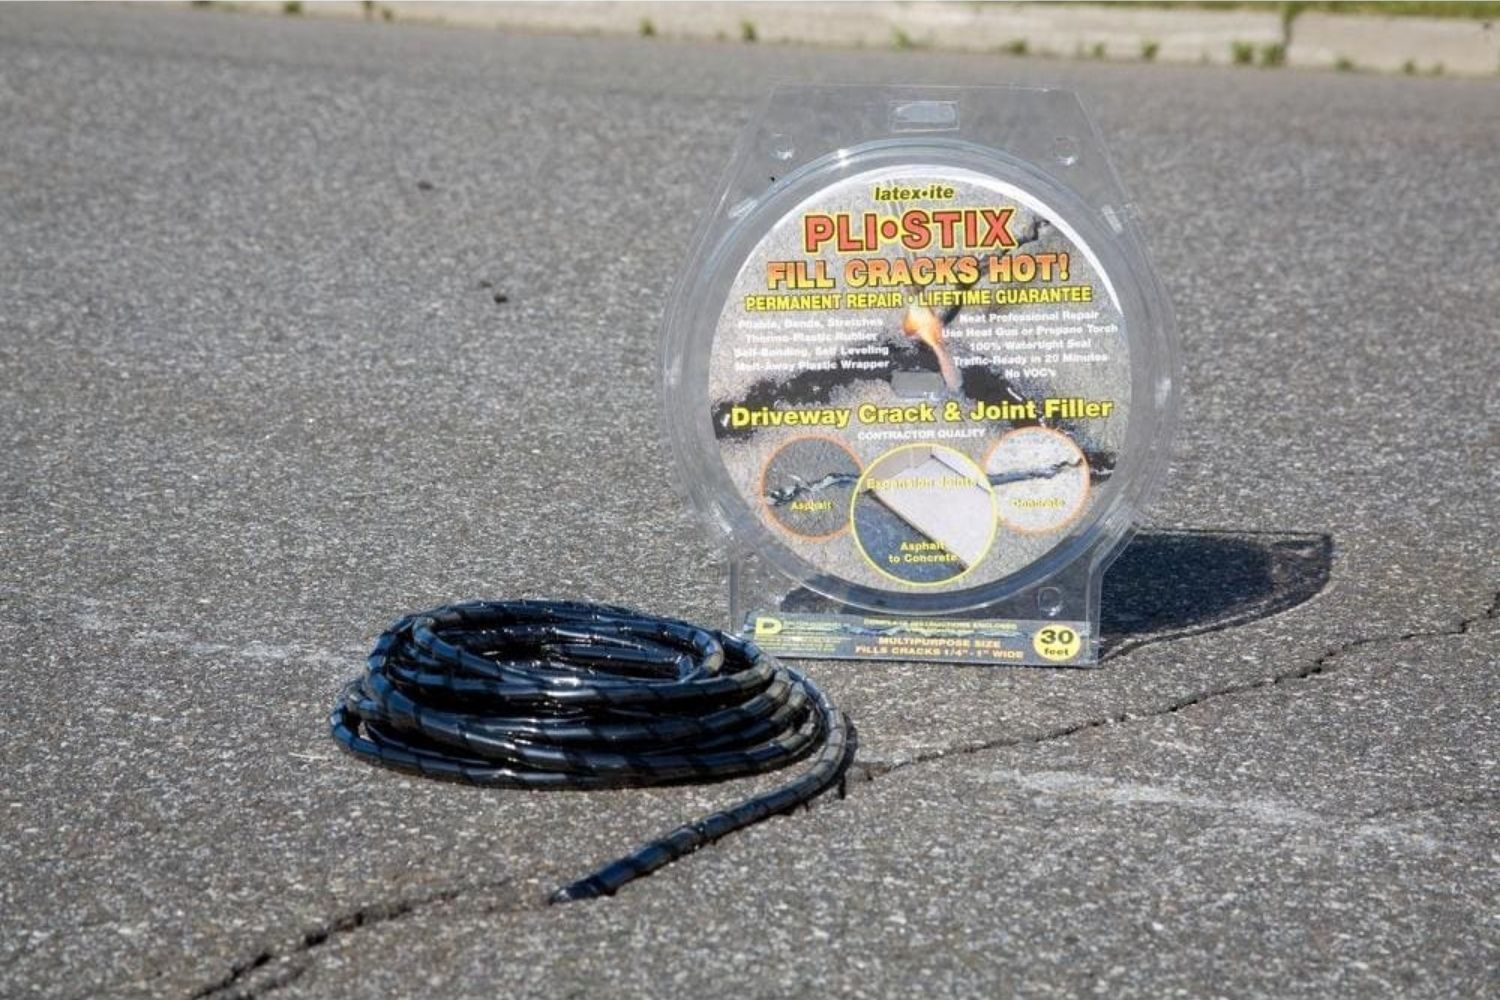 The Best Asphalt Driveway Crack Filler Option sits on the ground next to a large crack